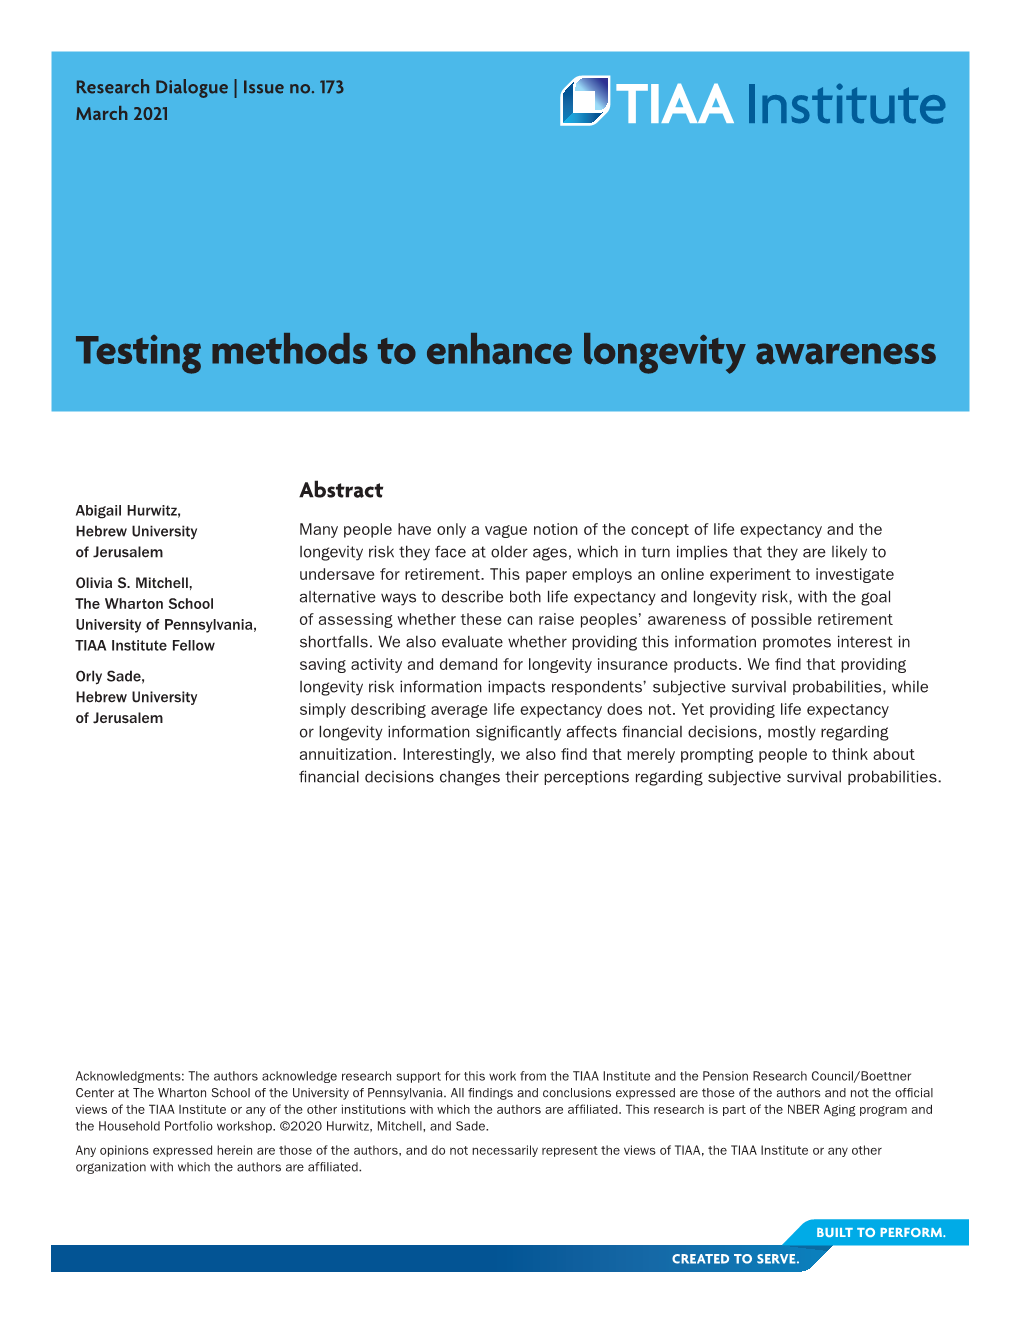 Testing Methods to Enhance Longevity Awareness